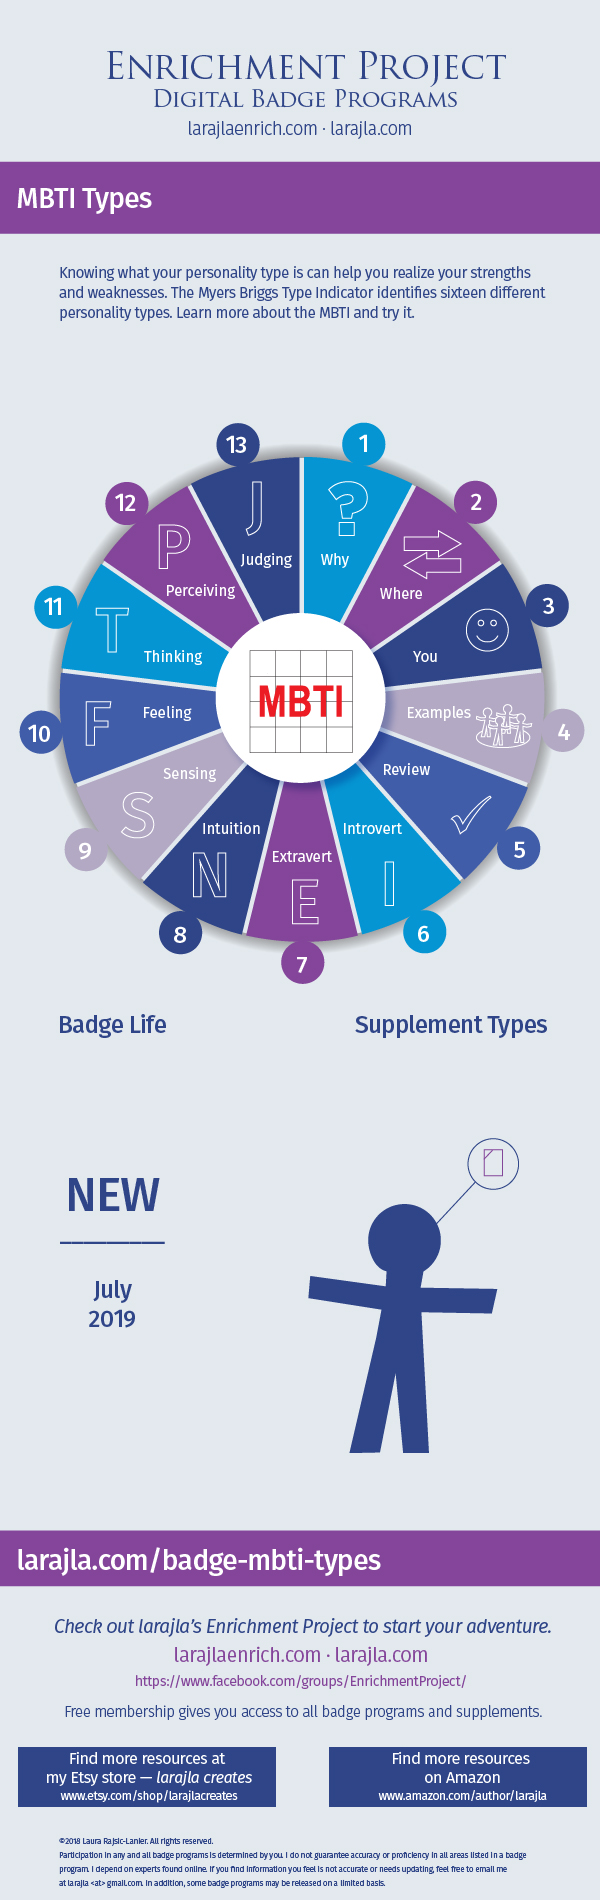 Badge Program: MBTI Types
Enrichment Project
larajla.com